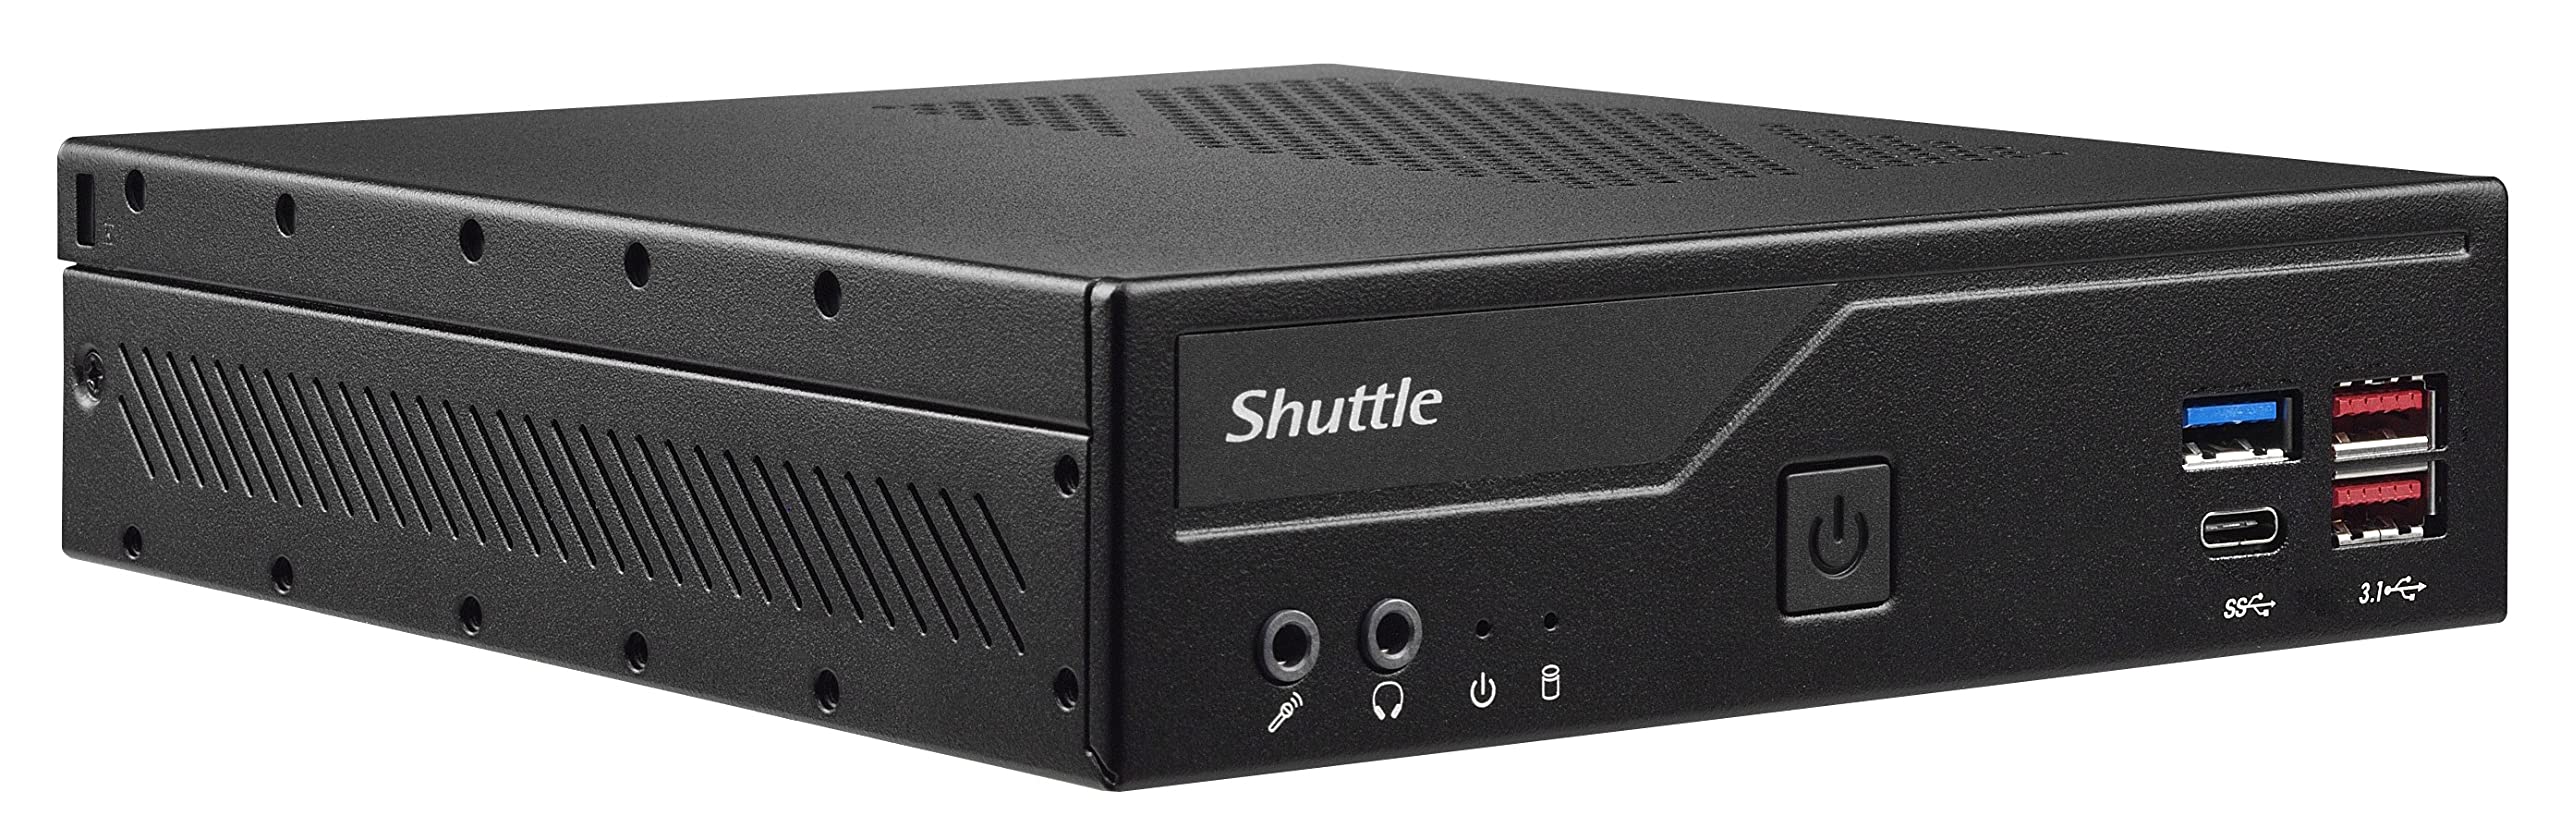 Shuttle XPC Slim DH470C Mini Barebone PC Intel H470 Support 65W Cometlake-s LGA1200 CPU No Ram No HDD/SSD No CPU No OS (Vesa Mount Included) ,Black